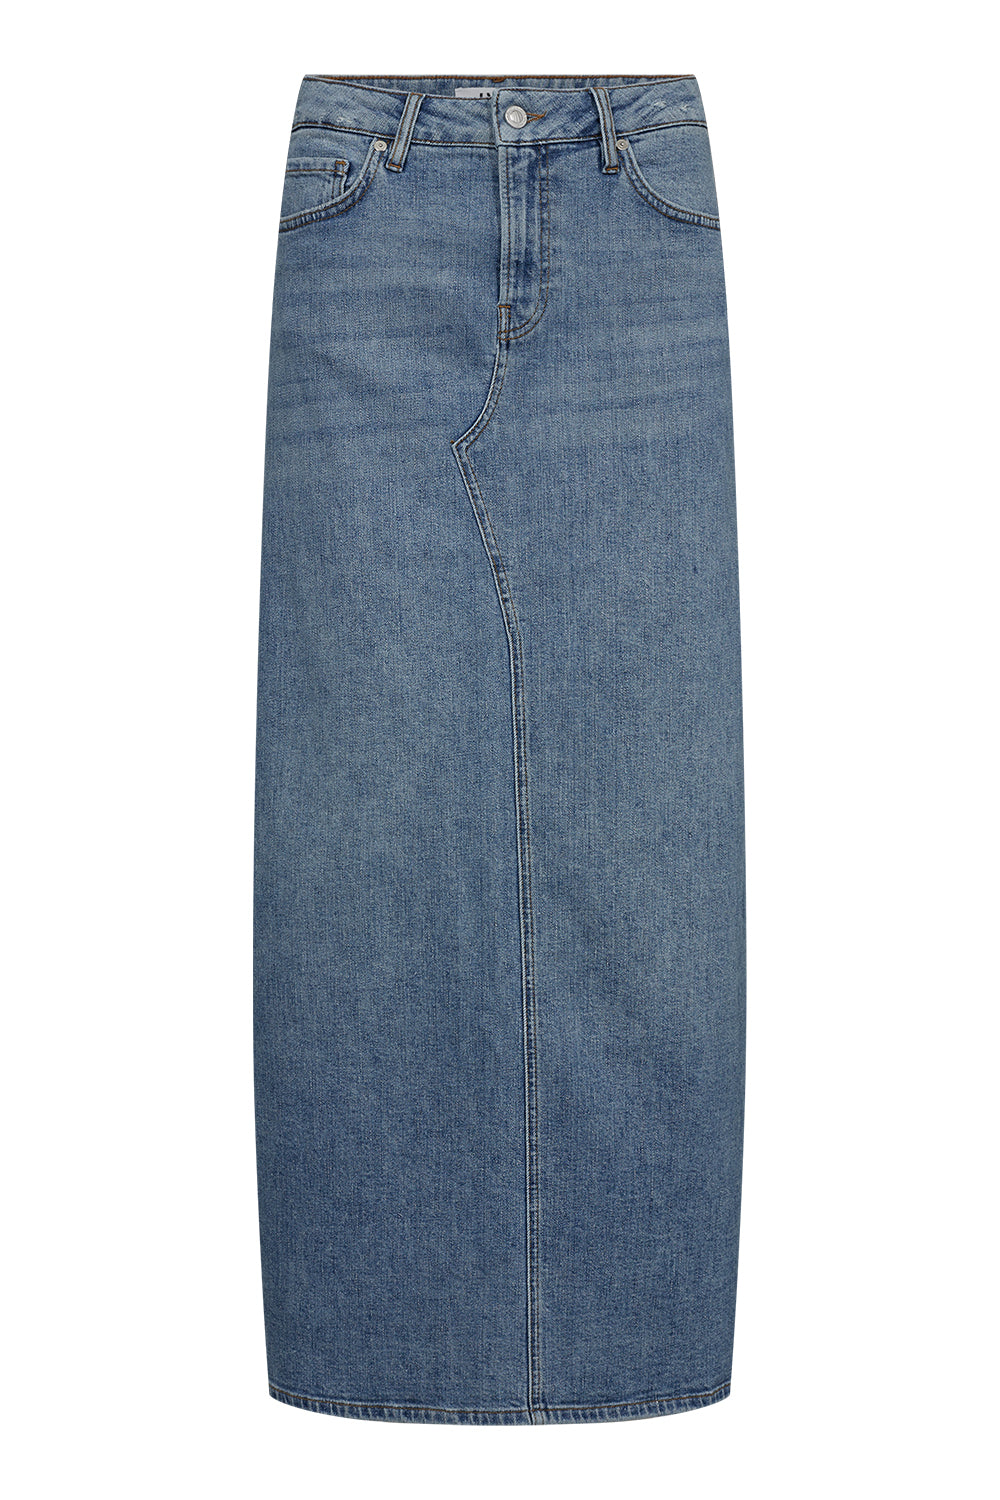 IVY Copenhagen IVY-Zoe Maxi Skirt Wash Cadiz Skirt 51 Denim Blue